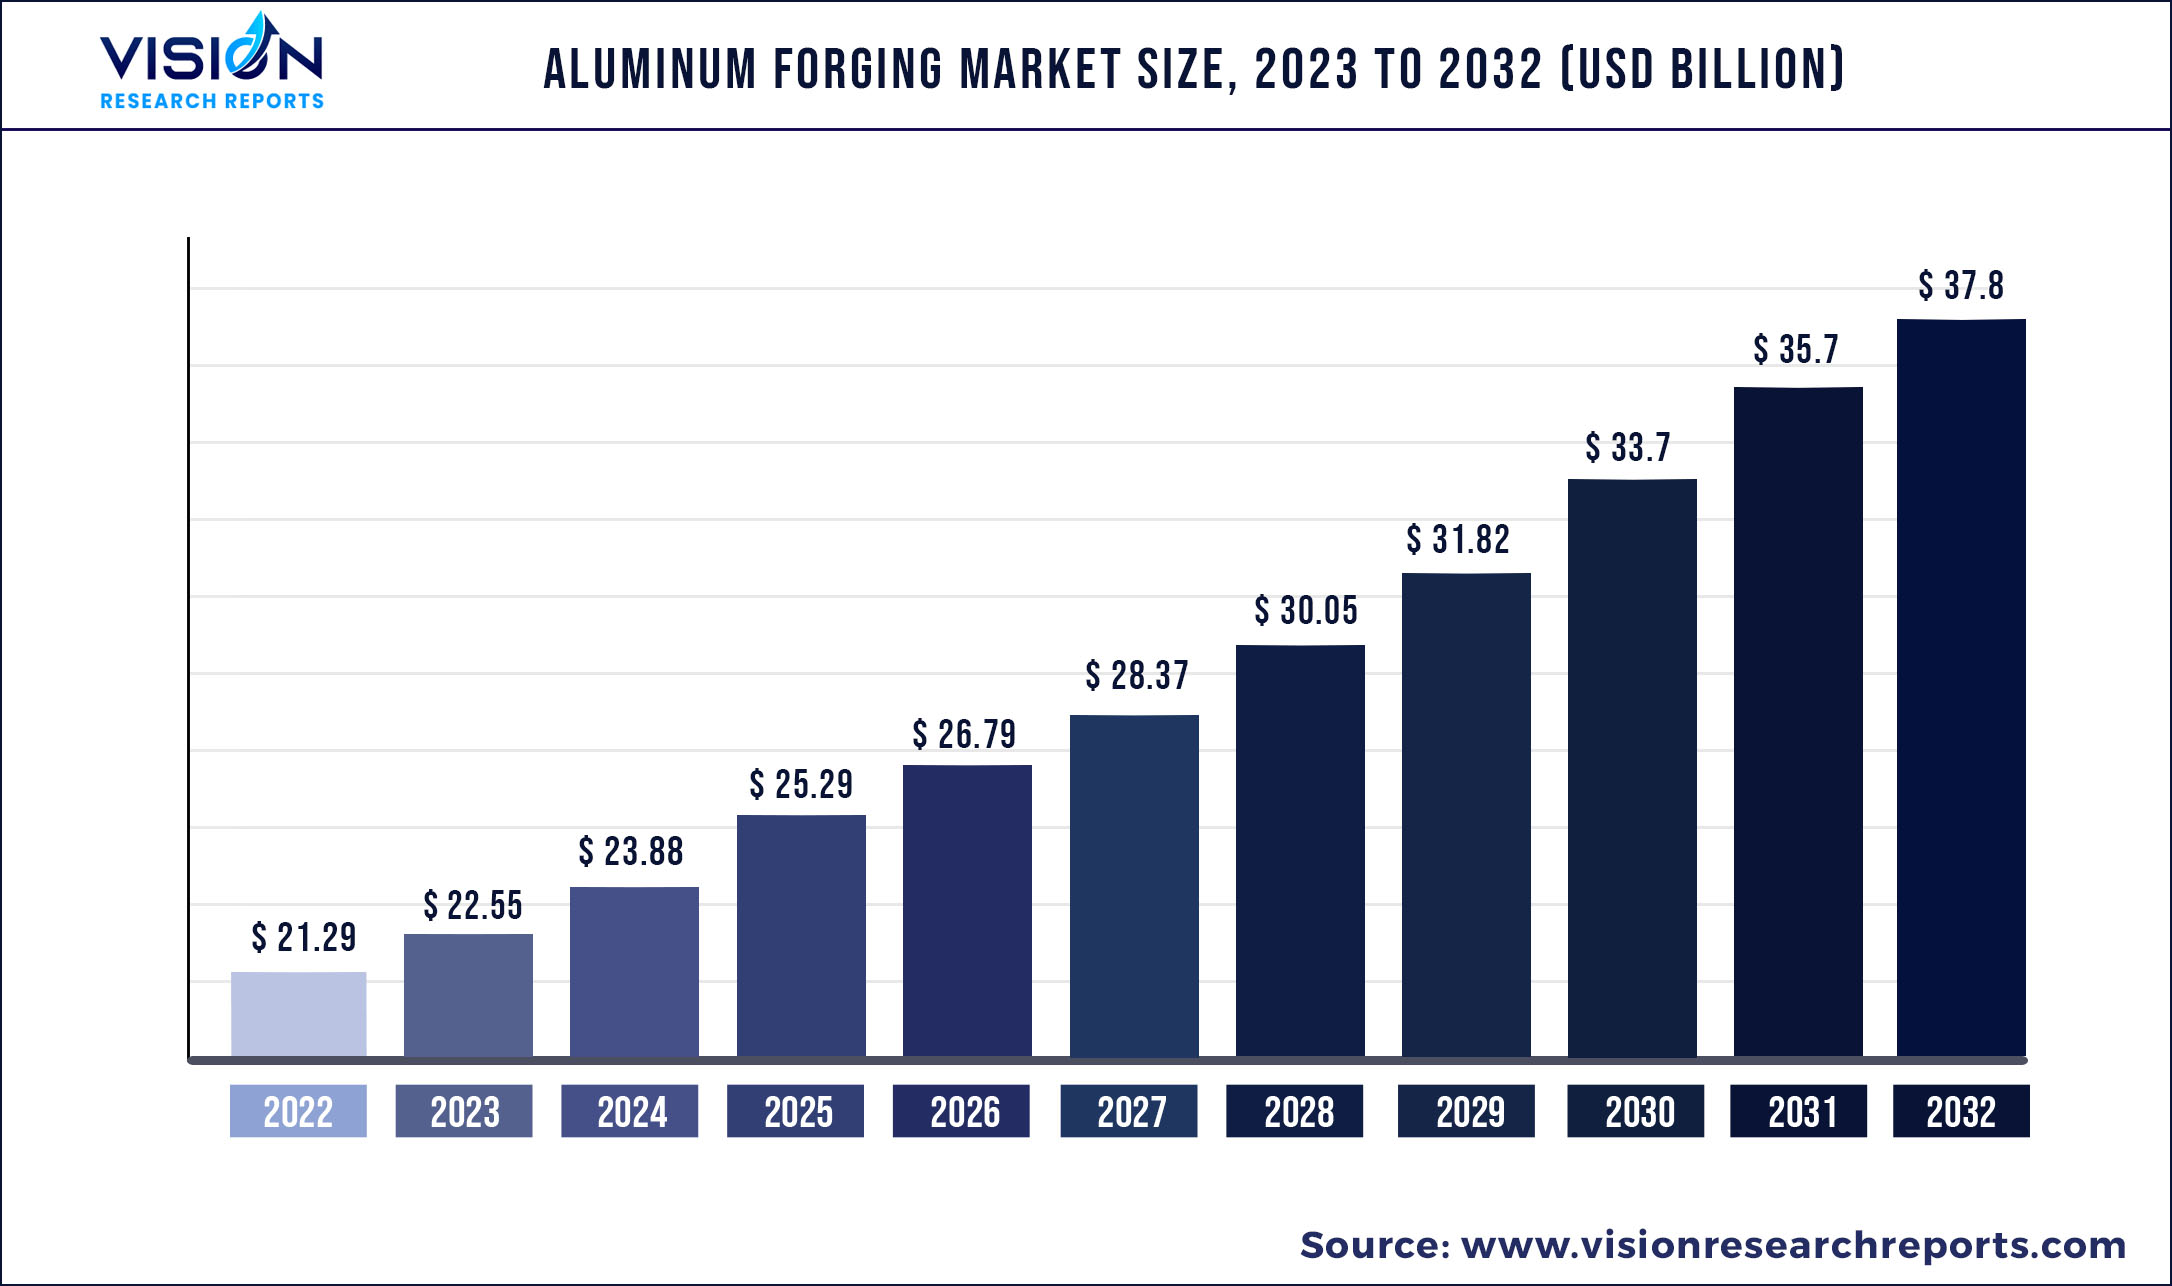 Aluminum Forging Market Size 2023 to 2032